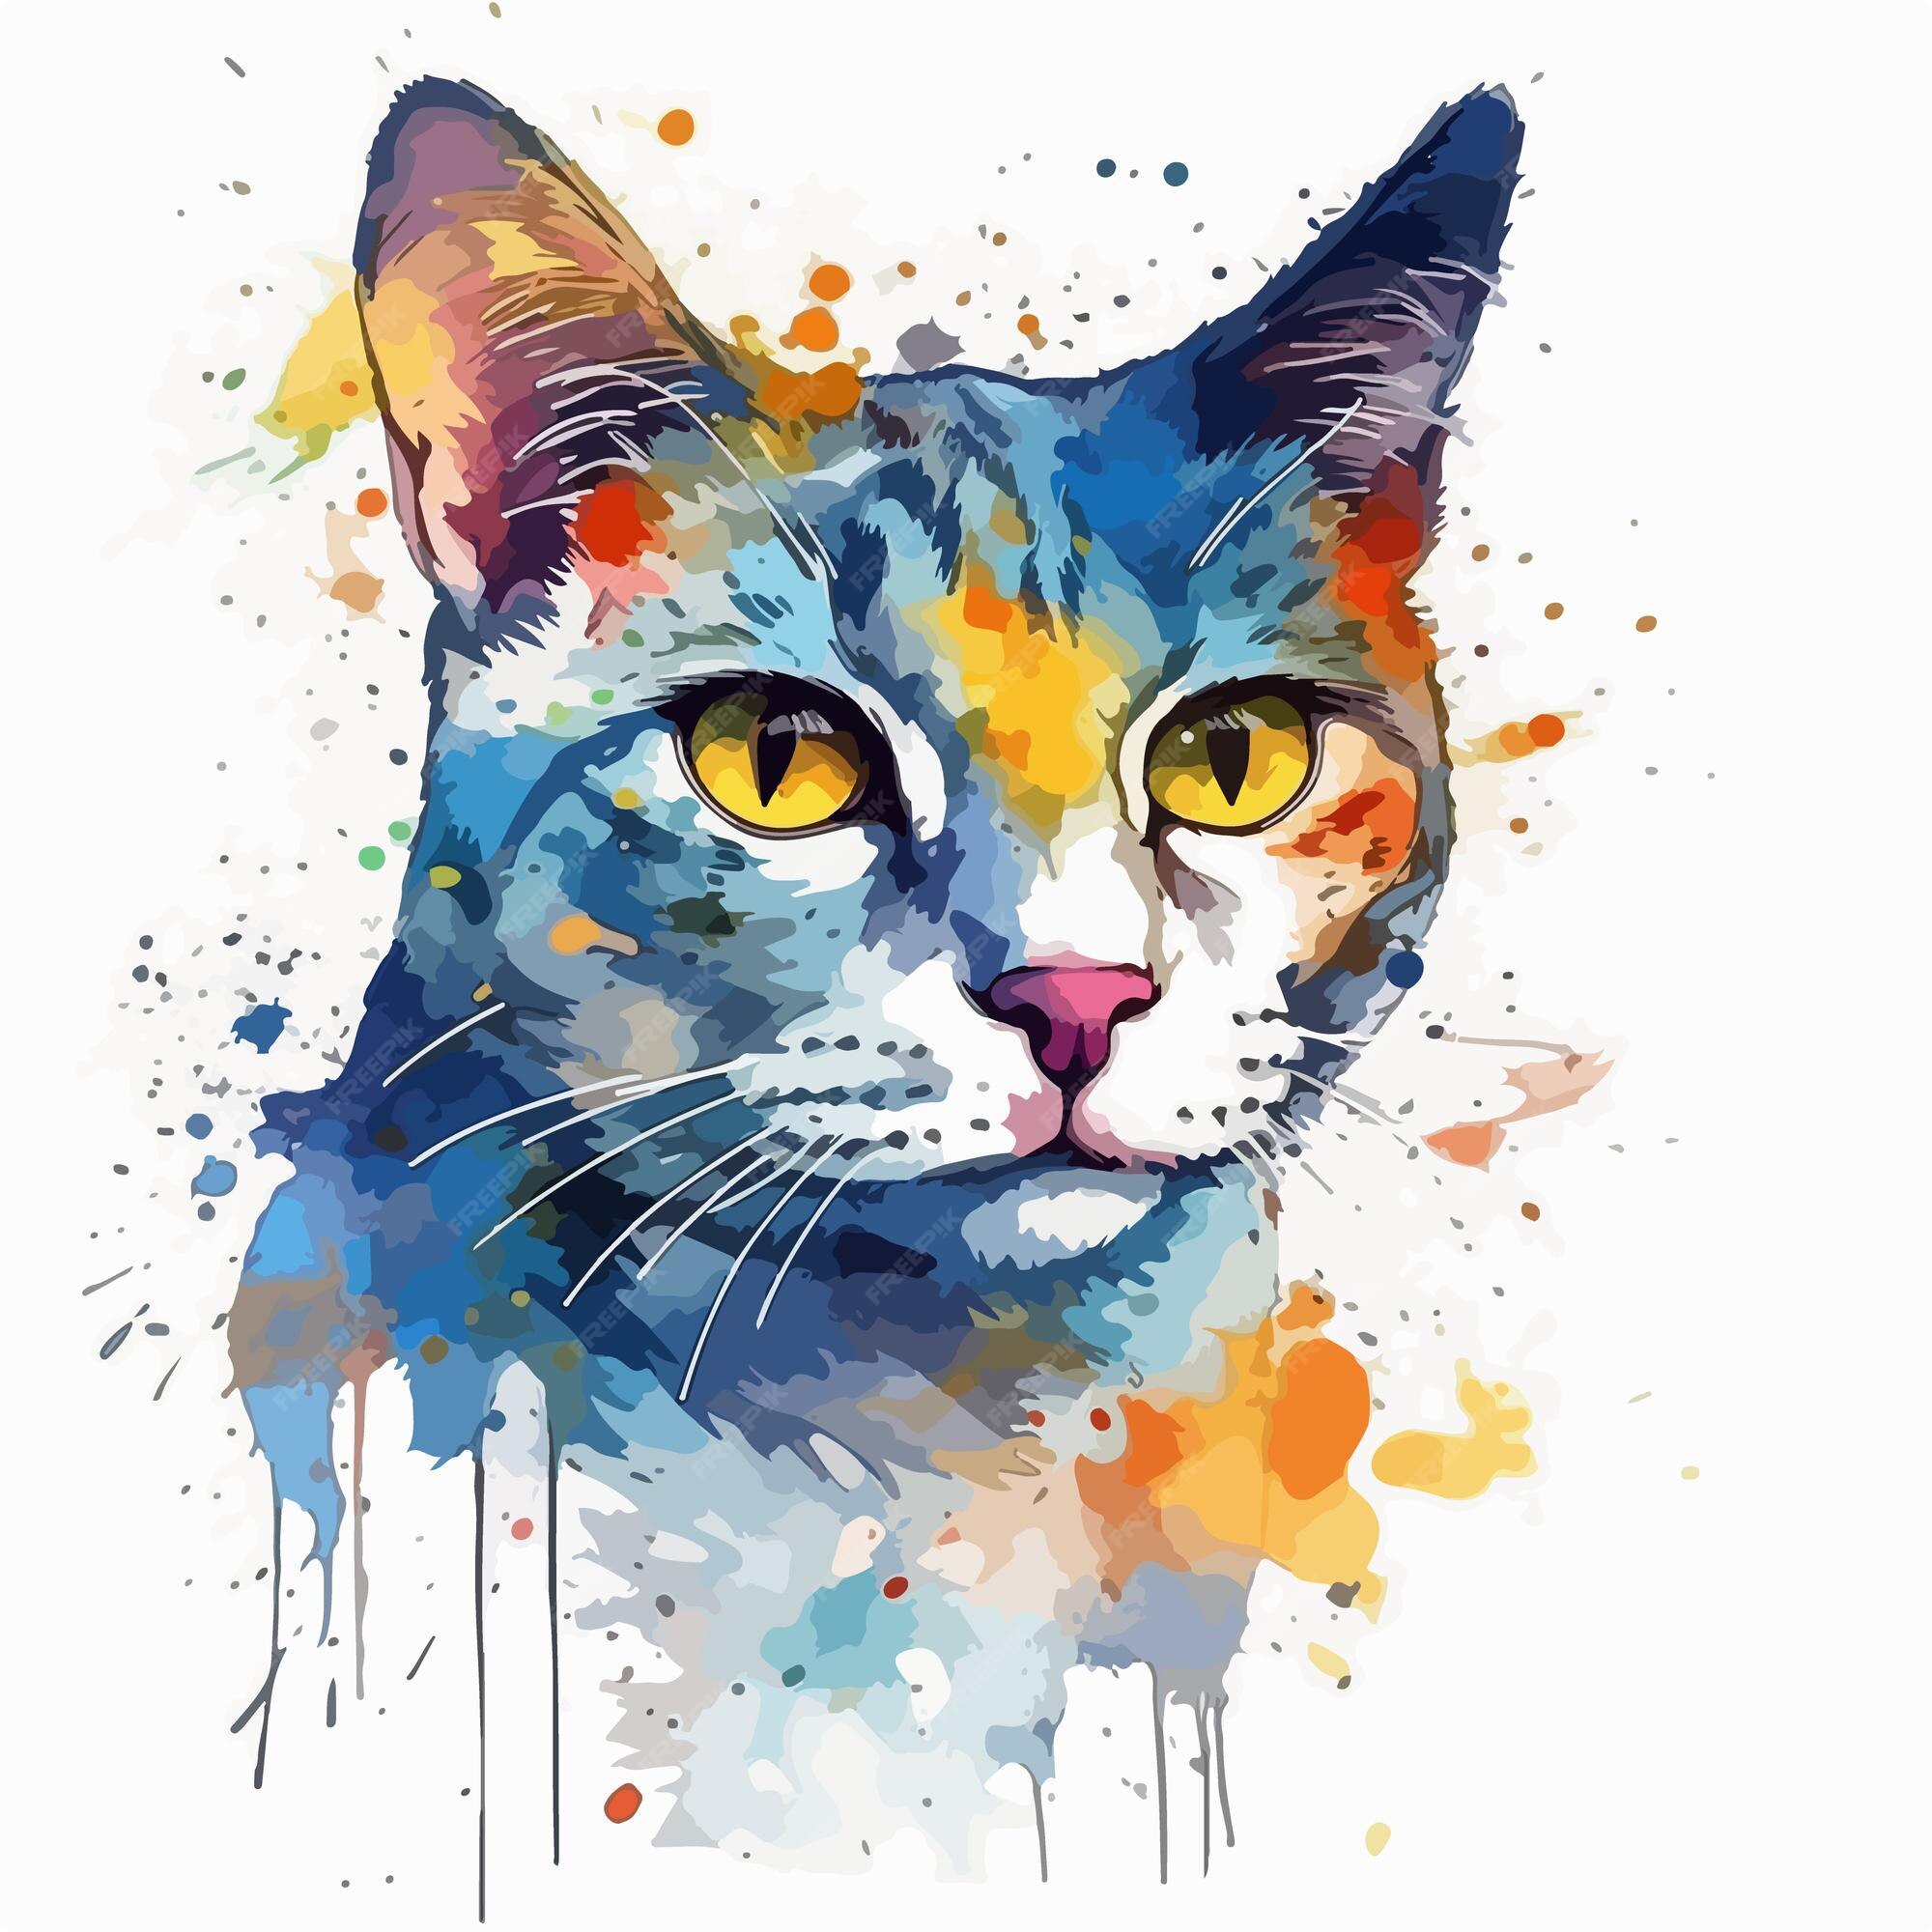 azul gato olho dentro pixel arte estilo 21867276 Vetor no Vecteezy